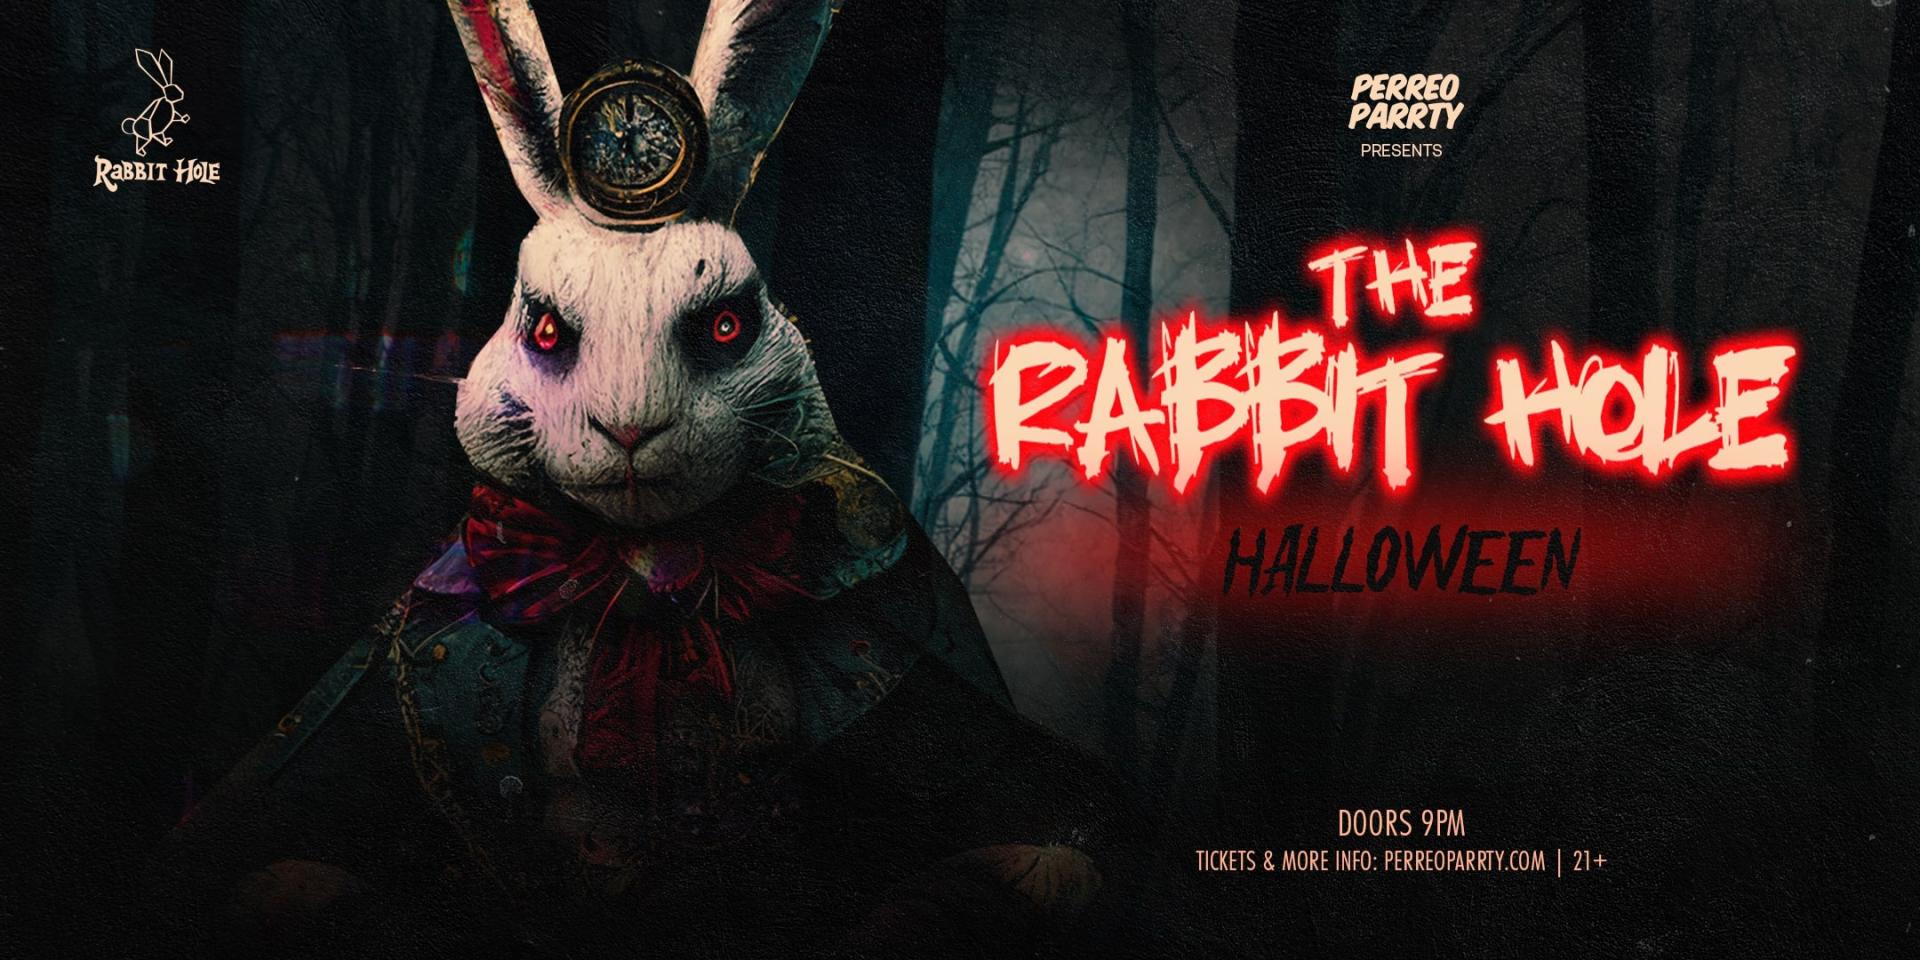 Bad Rabbit Saturdays: Latin & Reggaetón Party @ Rabbit Hole NYC